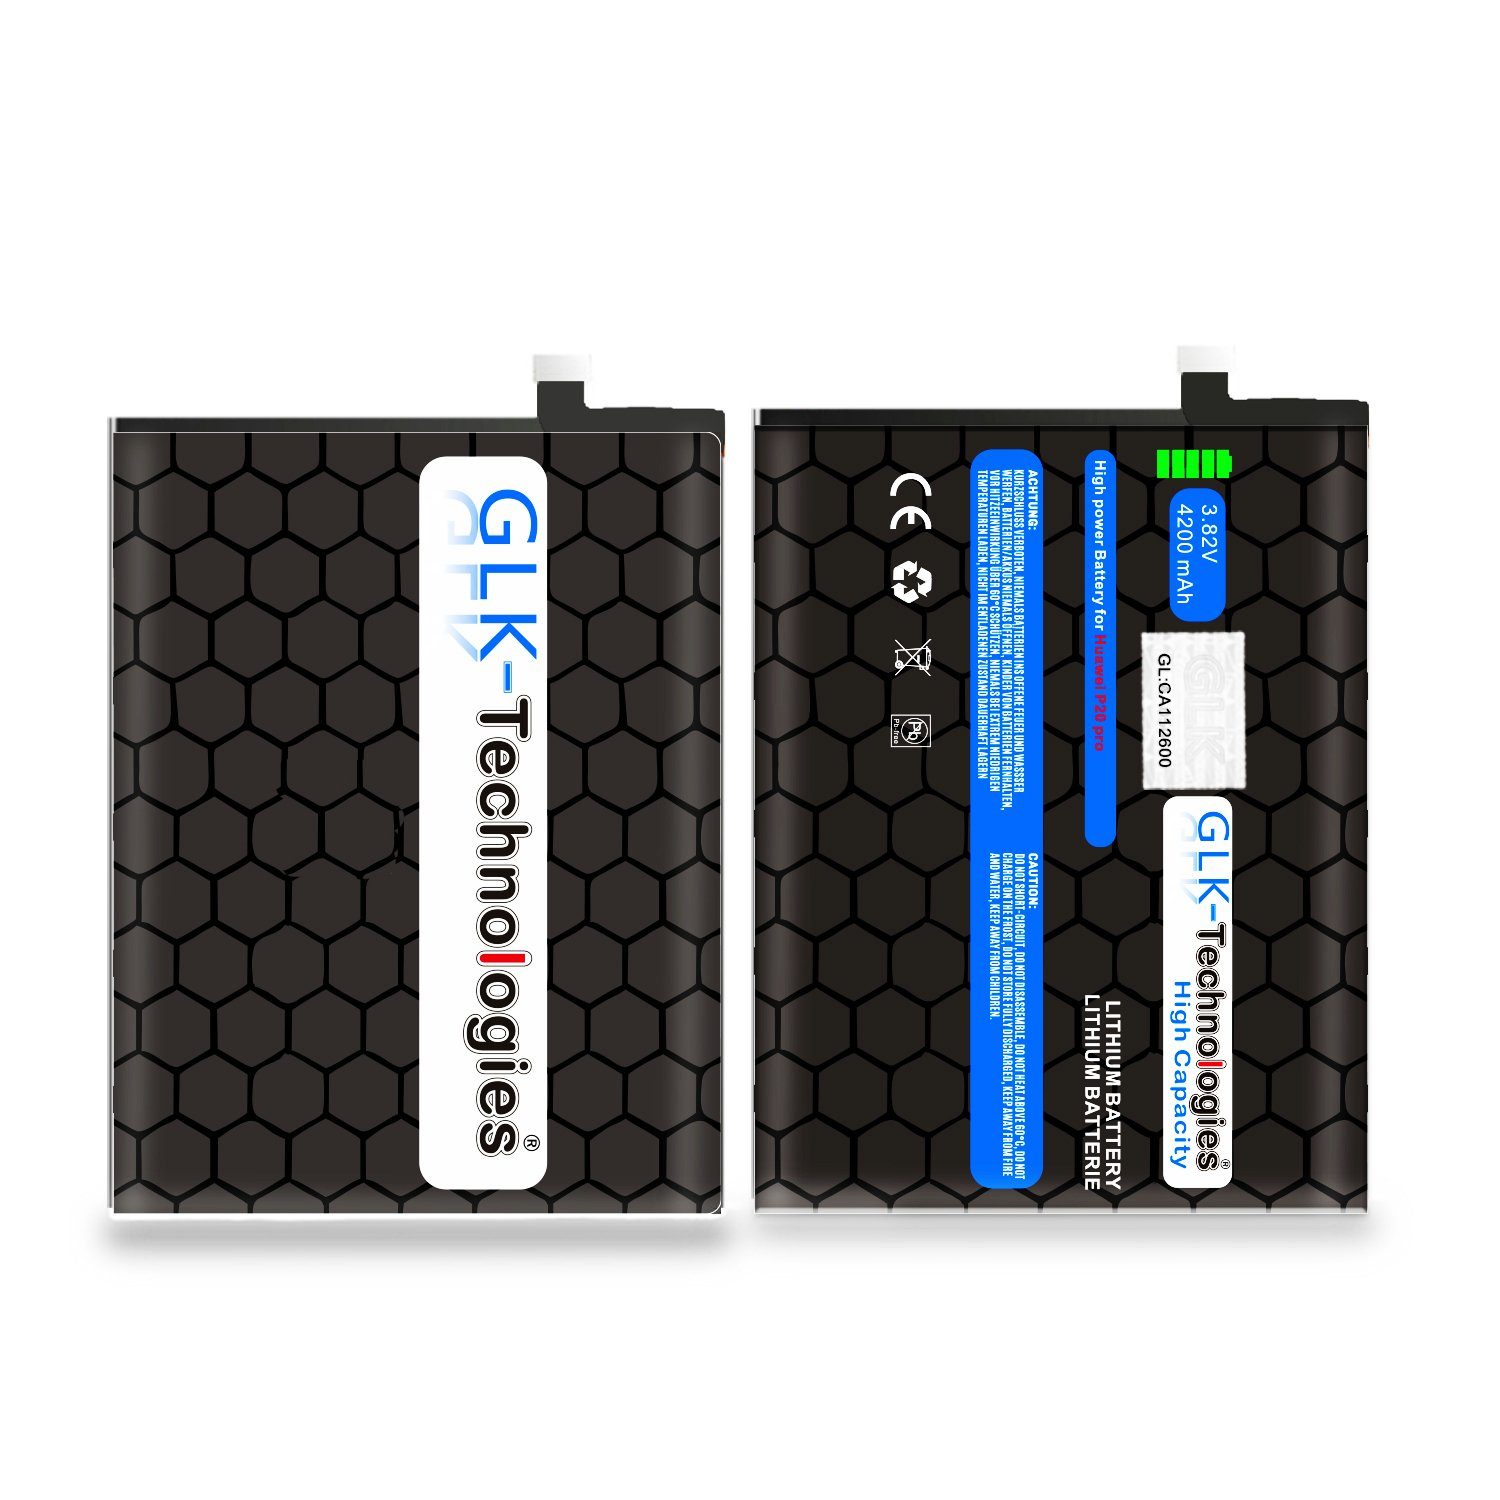 GLK-Technologies GLK Akku Battery für 4200mAh Handy-Akku V) Ohne HB436486ECW (3.8 SET Mate 20 Huawei